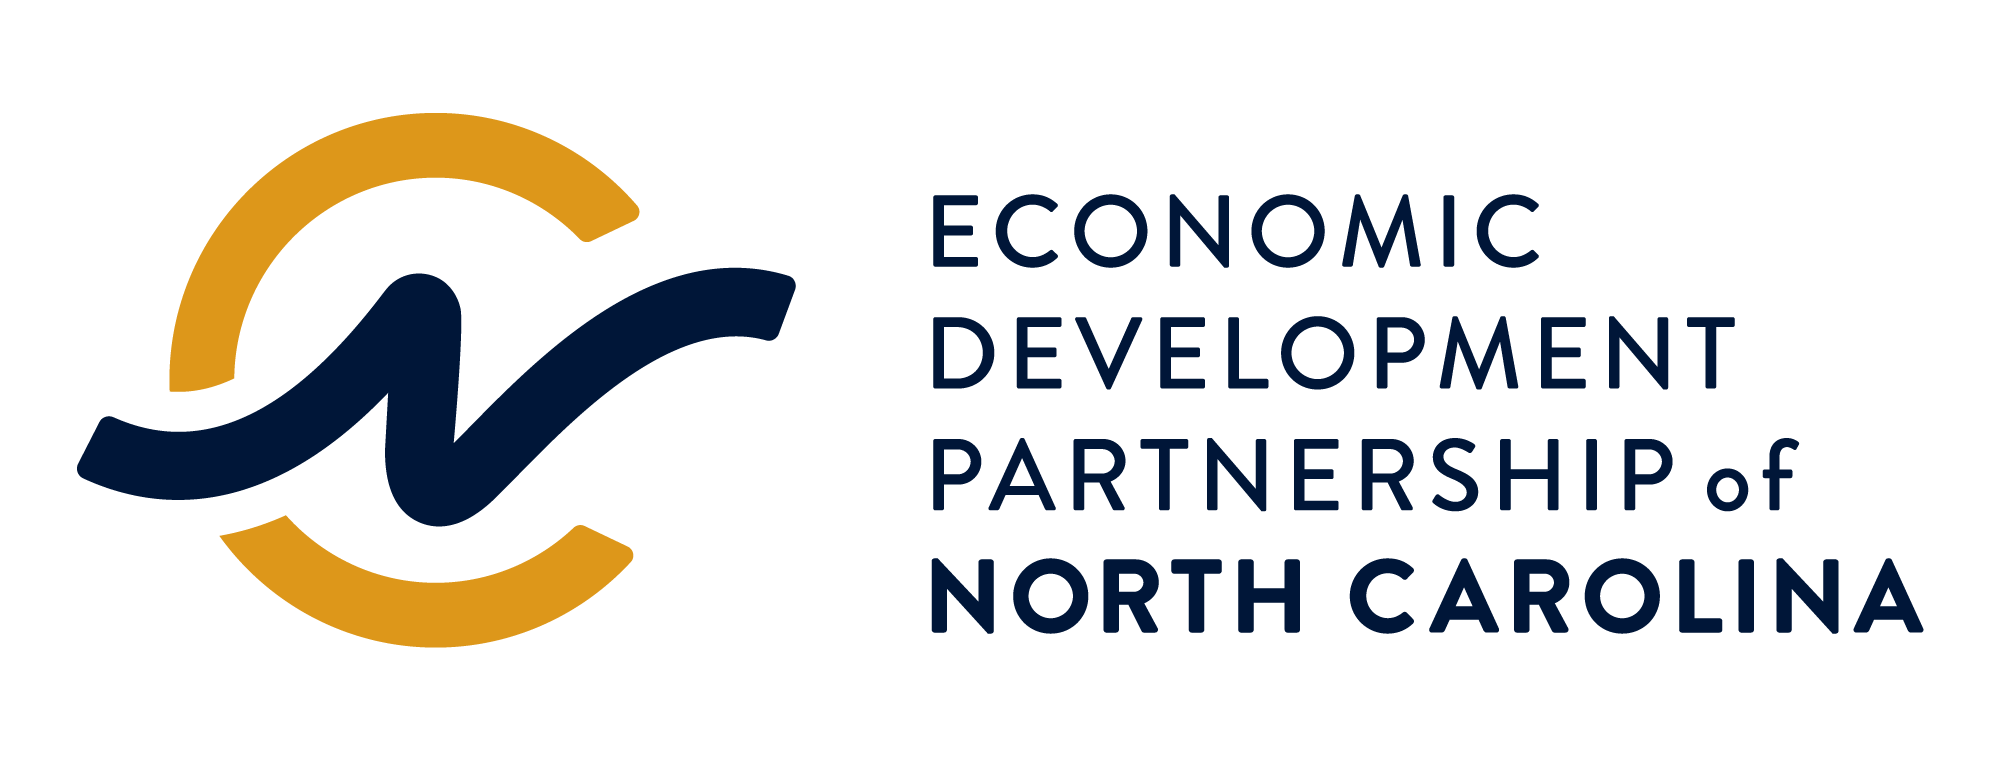 Economic Development Partnership of NC